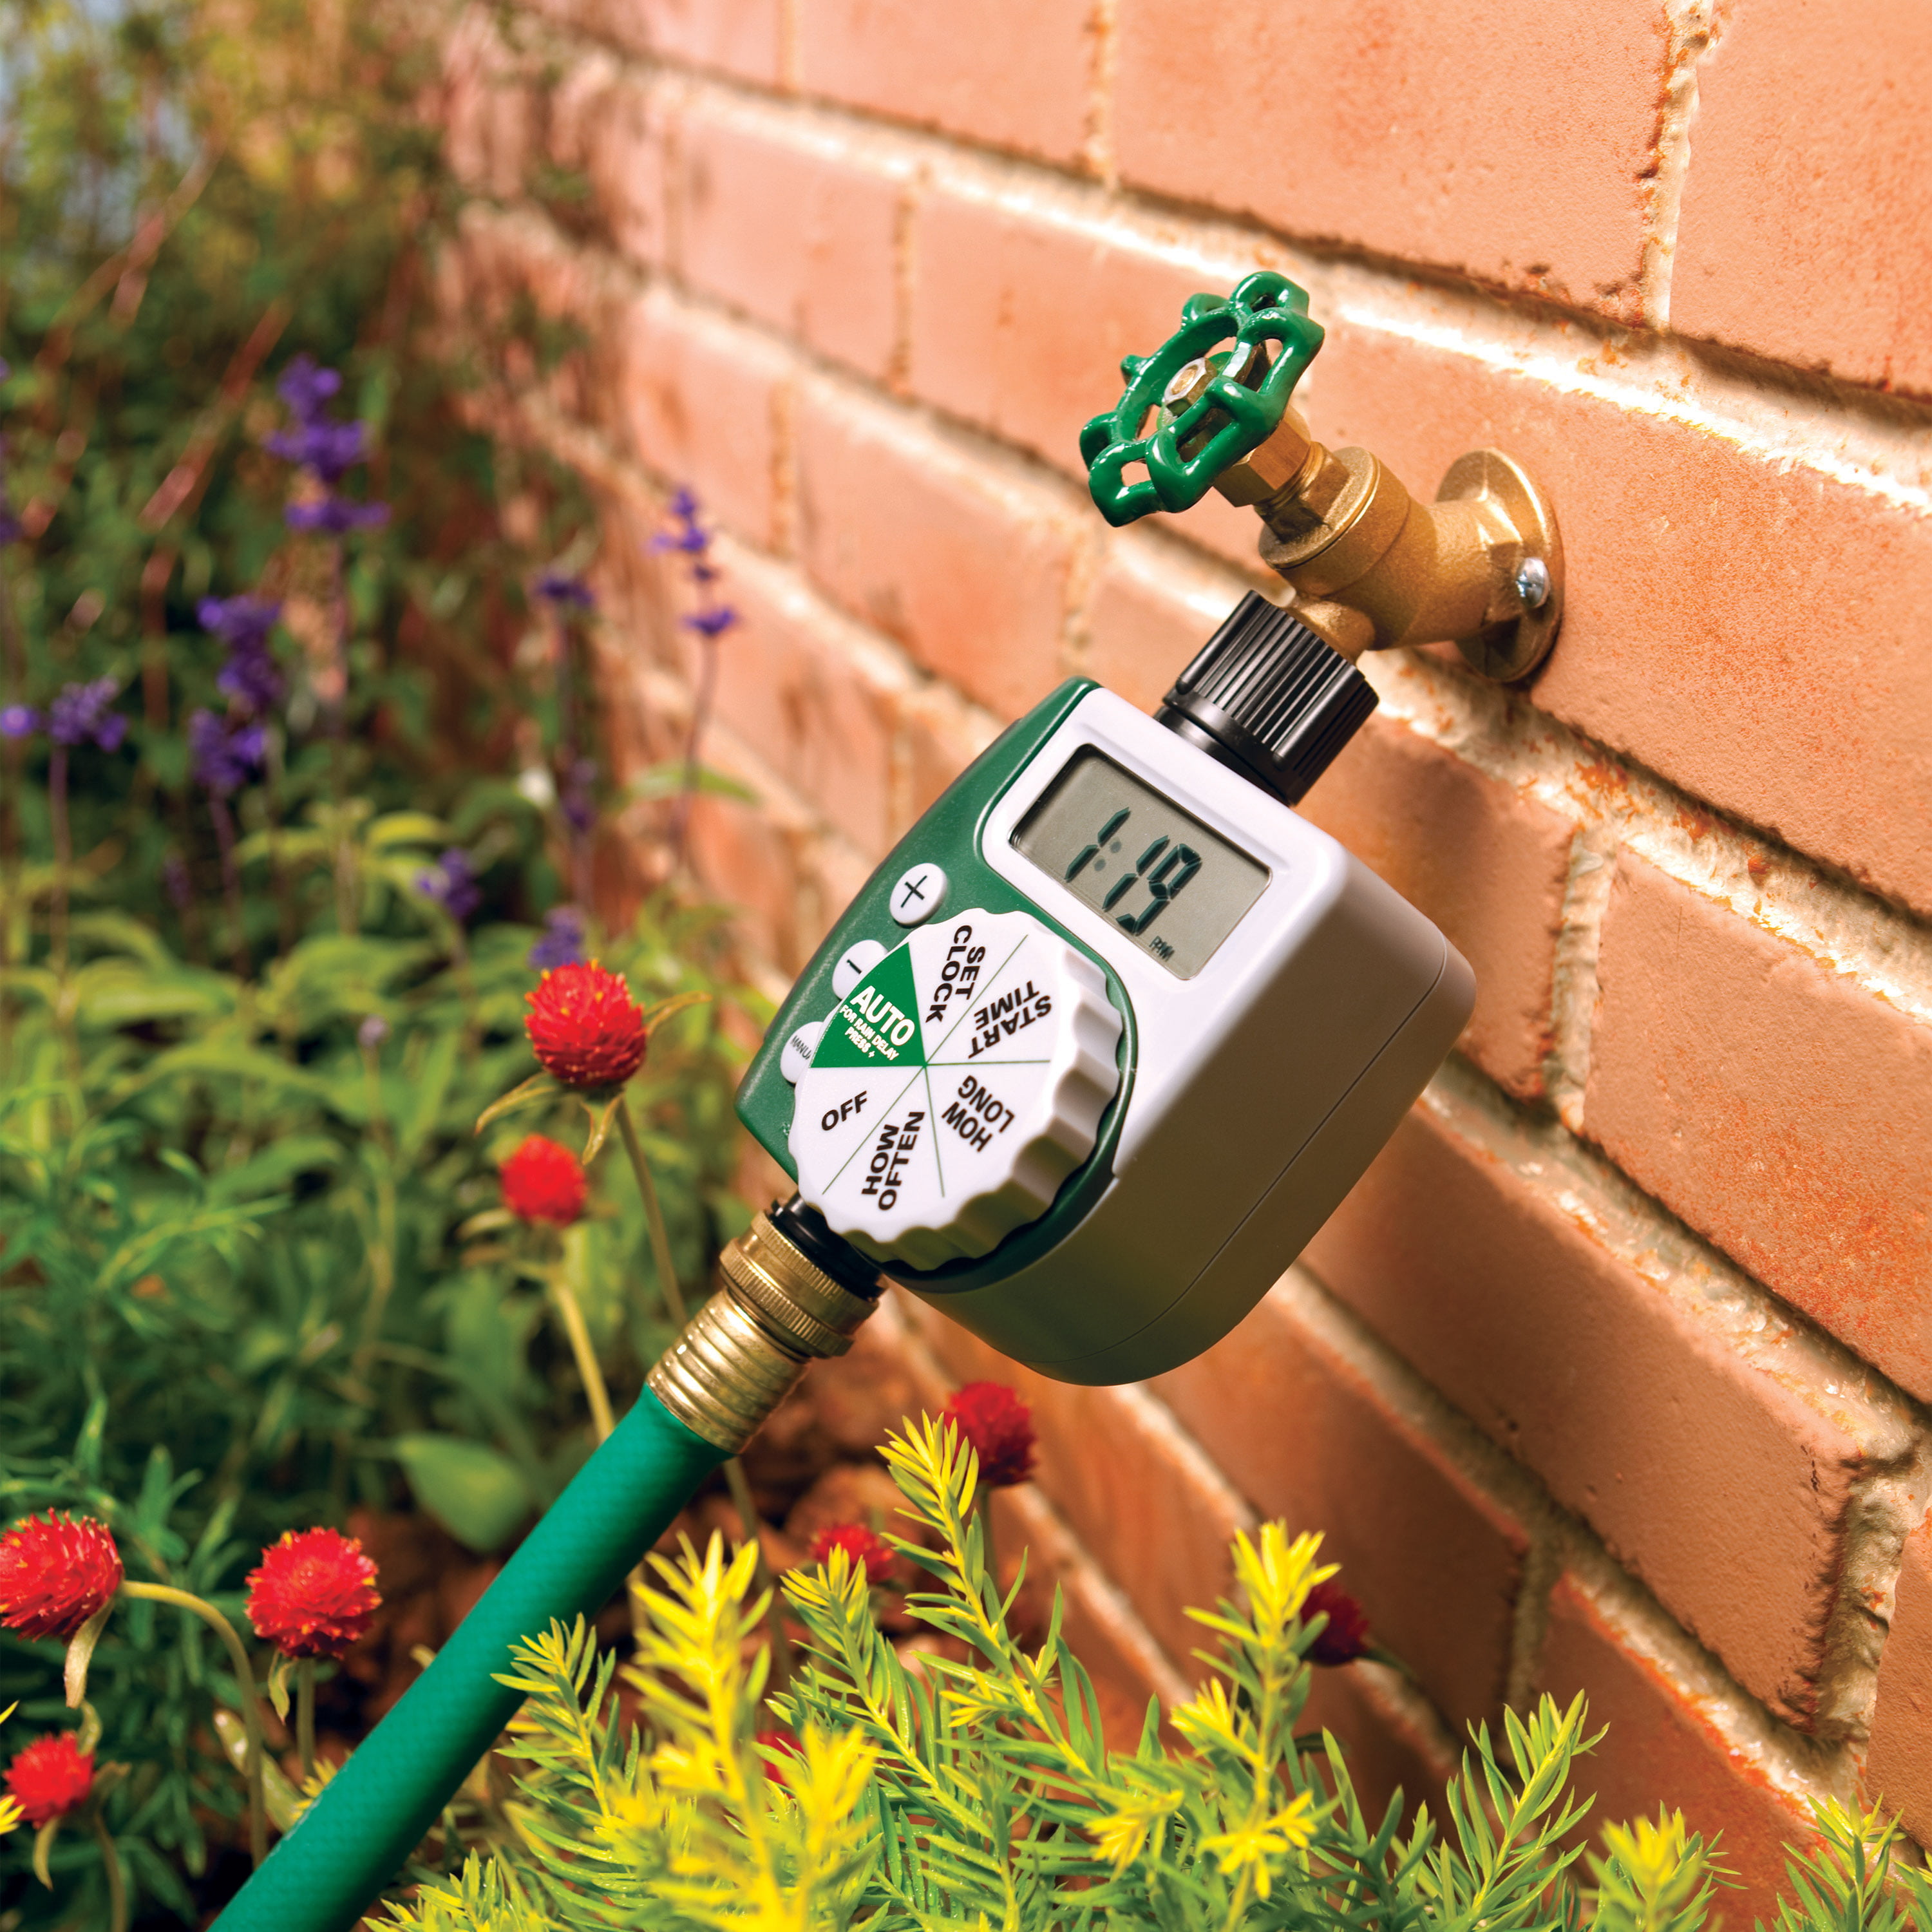 Hose Watering Timer Com, Garden Hose Water Timer Reviews